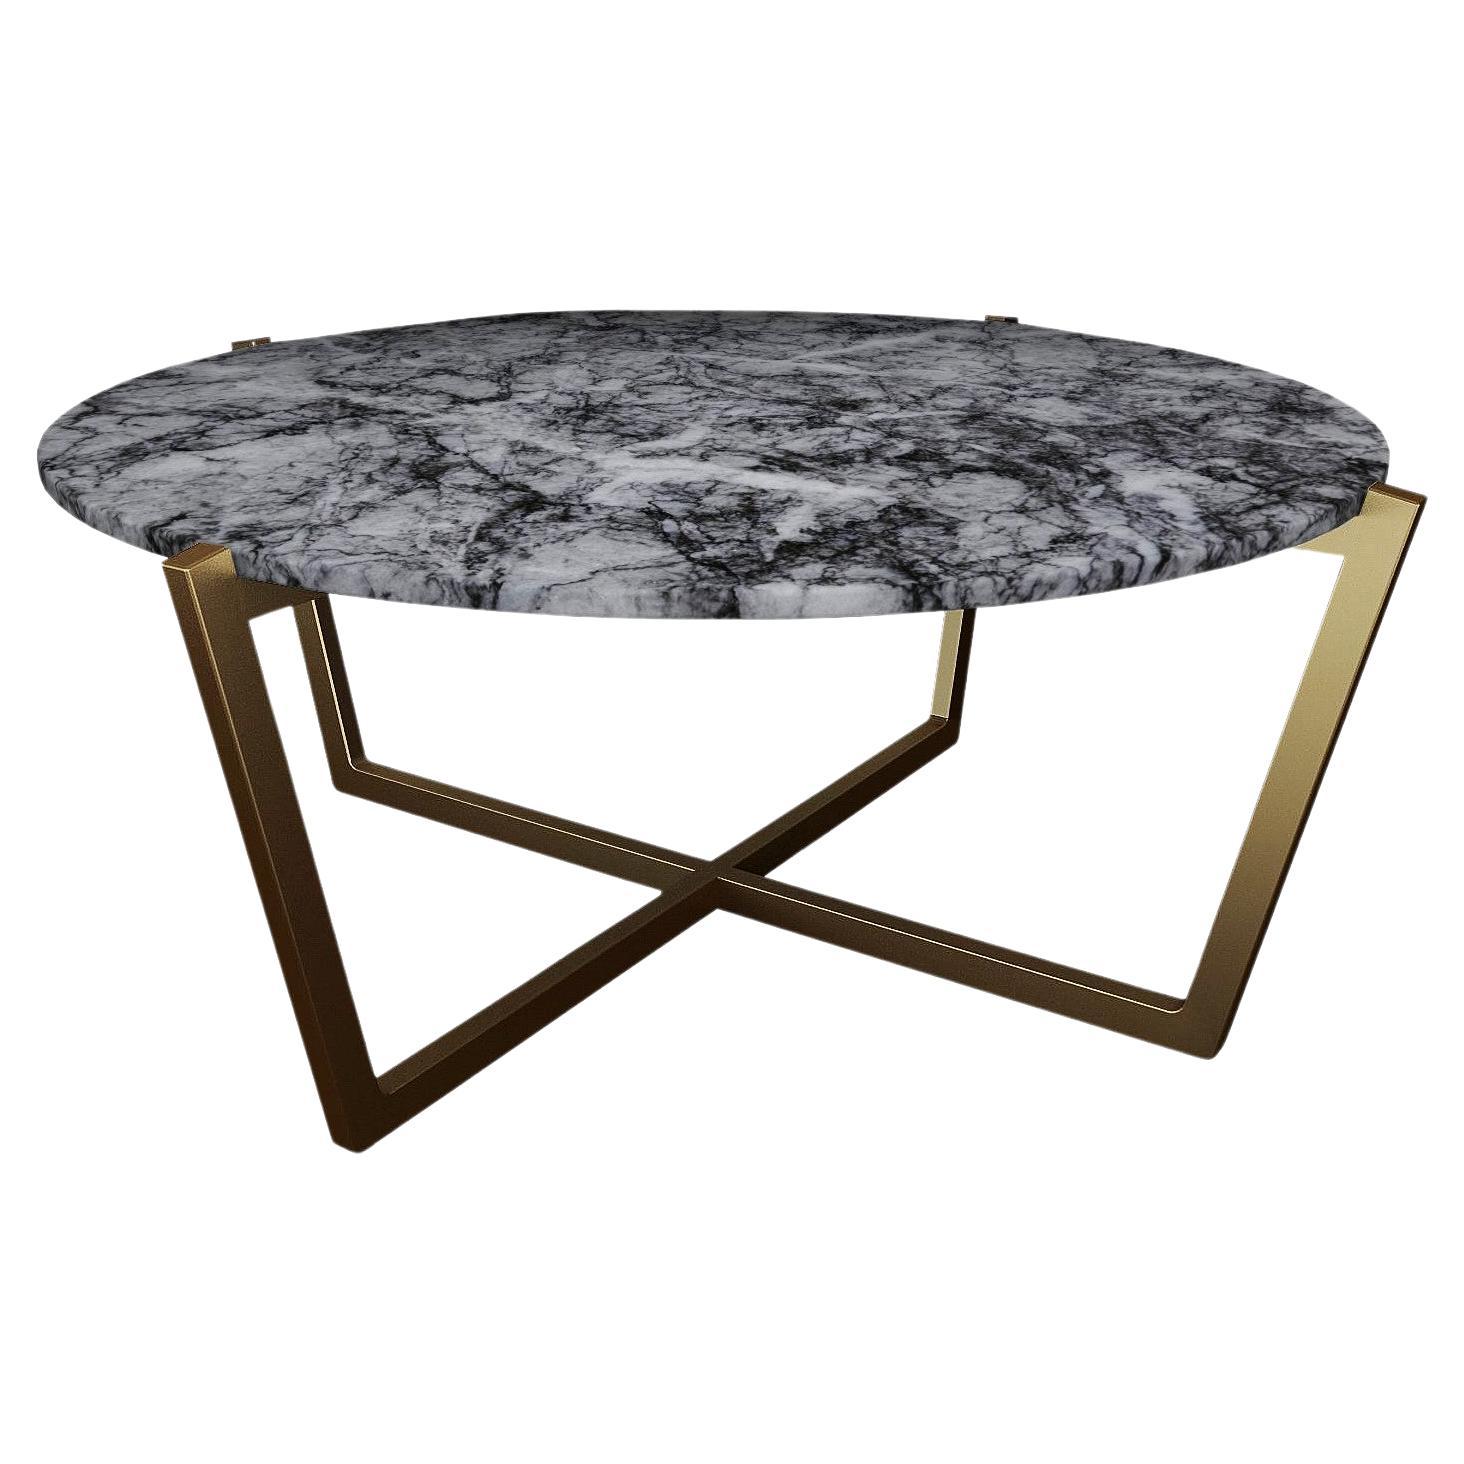 NORDST EMMA Coffee Table, Italian Grey Rain Marble, Danish Modern Design, New For Sale